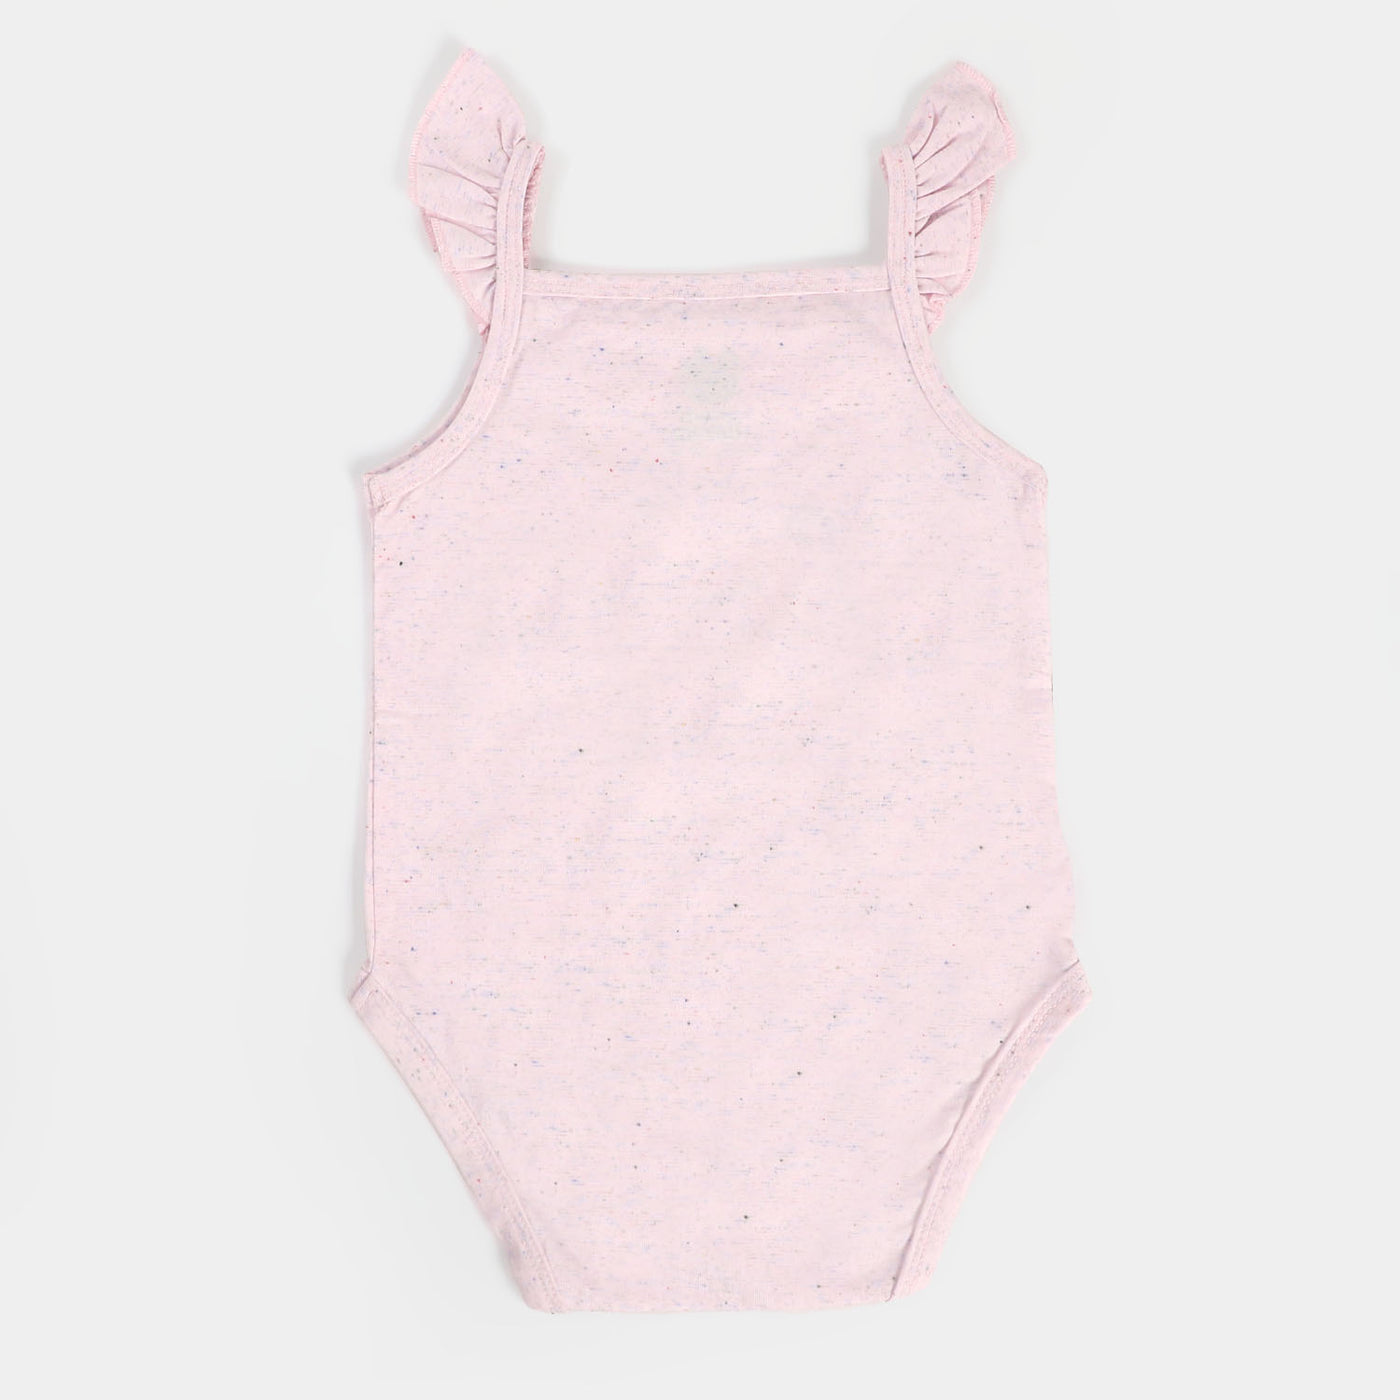 Infant Girls Knitted Romper Love You - S-Shell